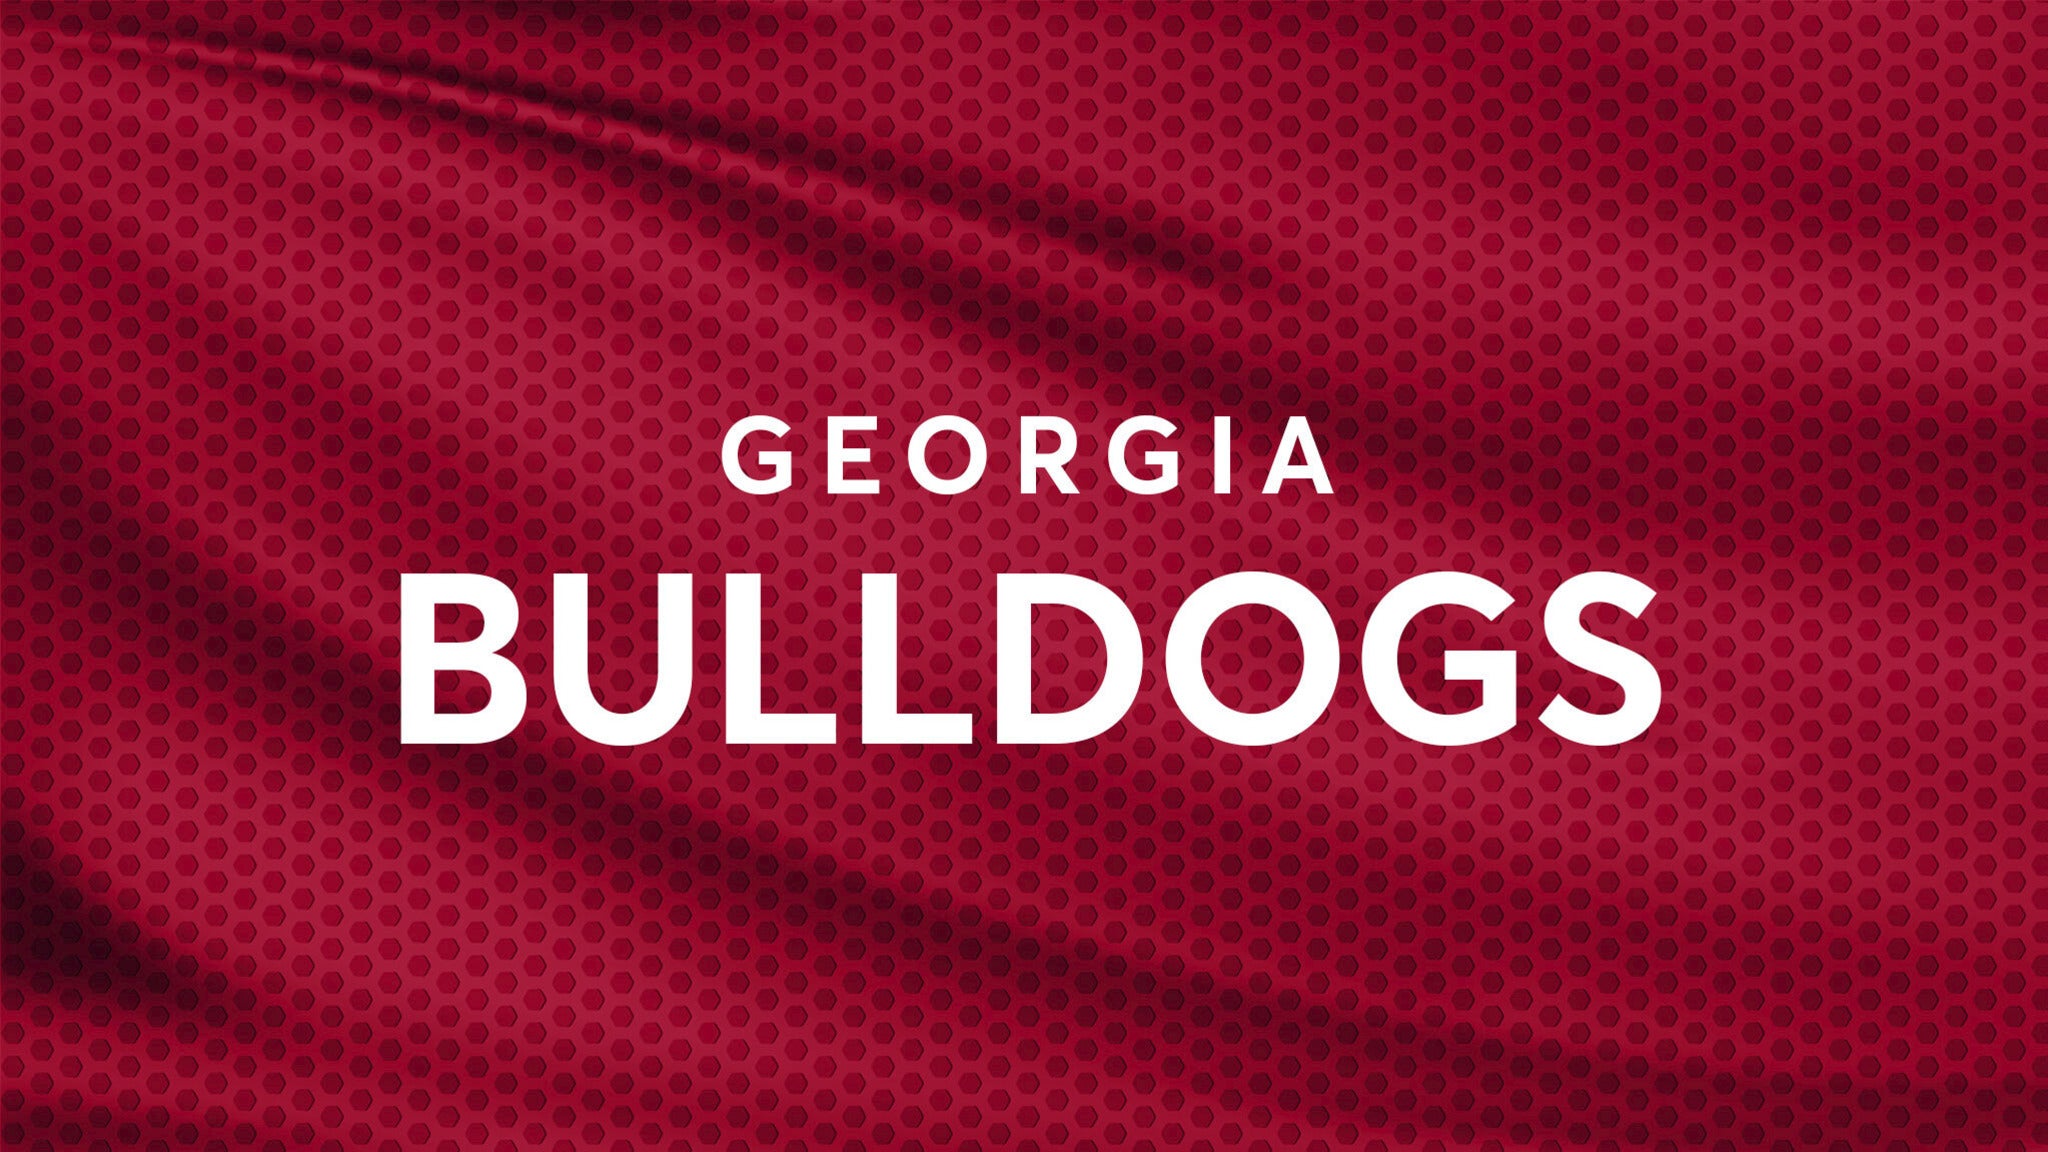 Georgia Bulldogs Football vs. Auburn Tigers Football